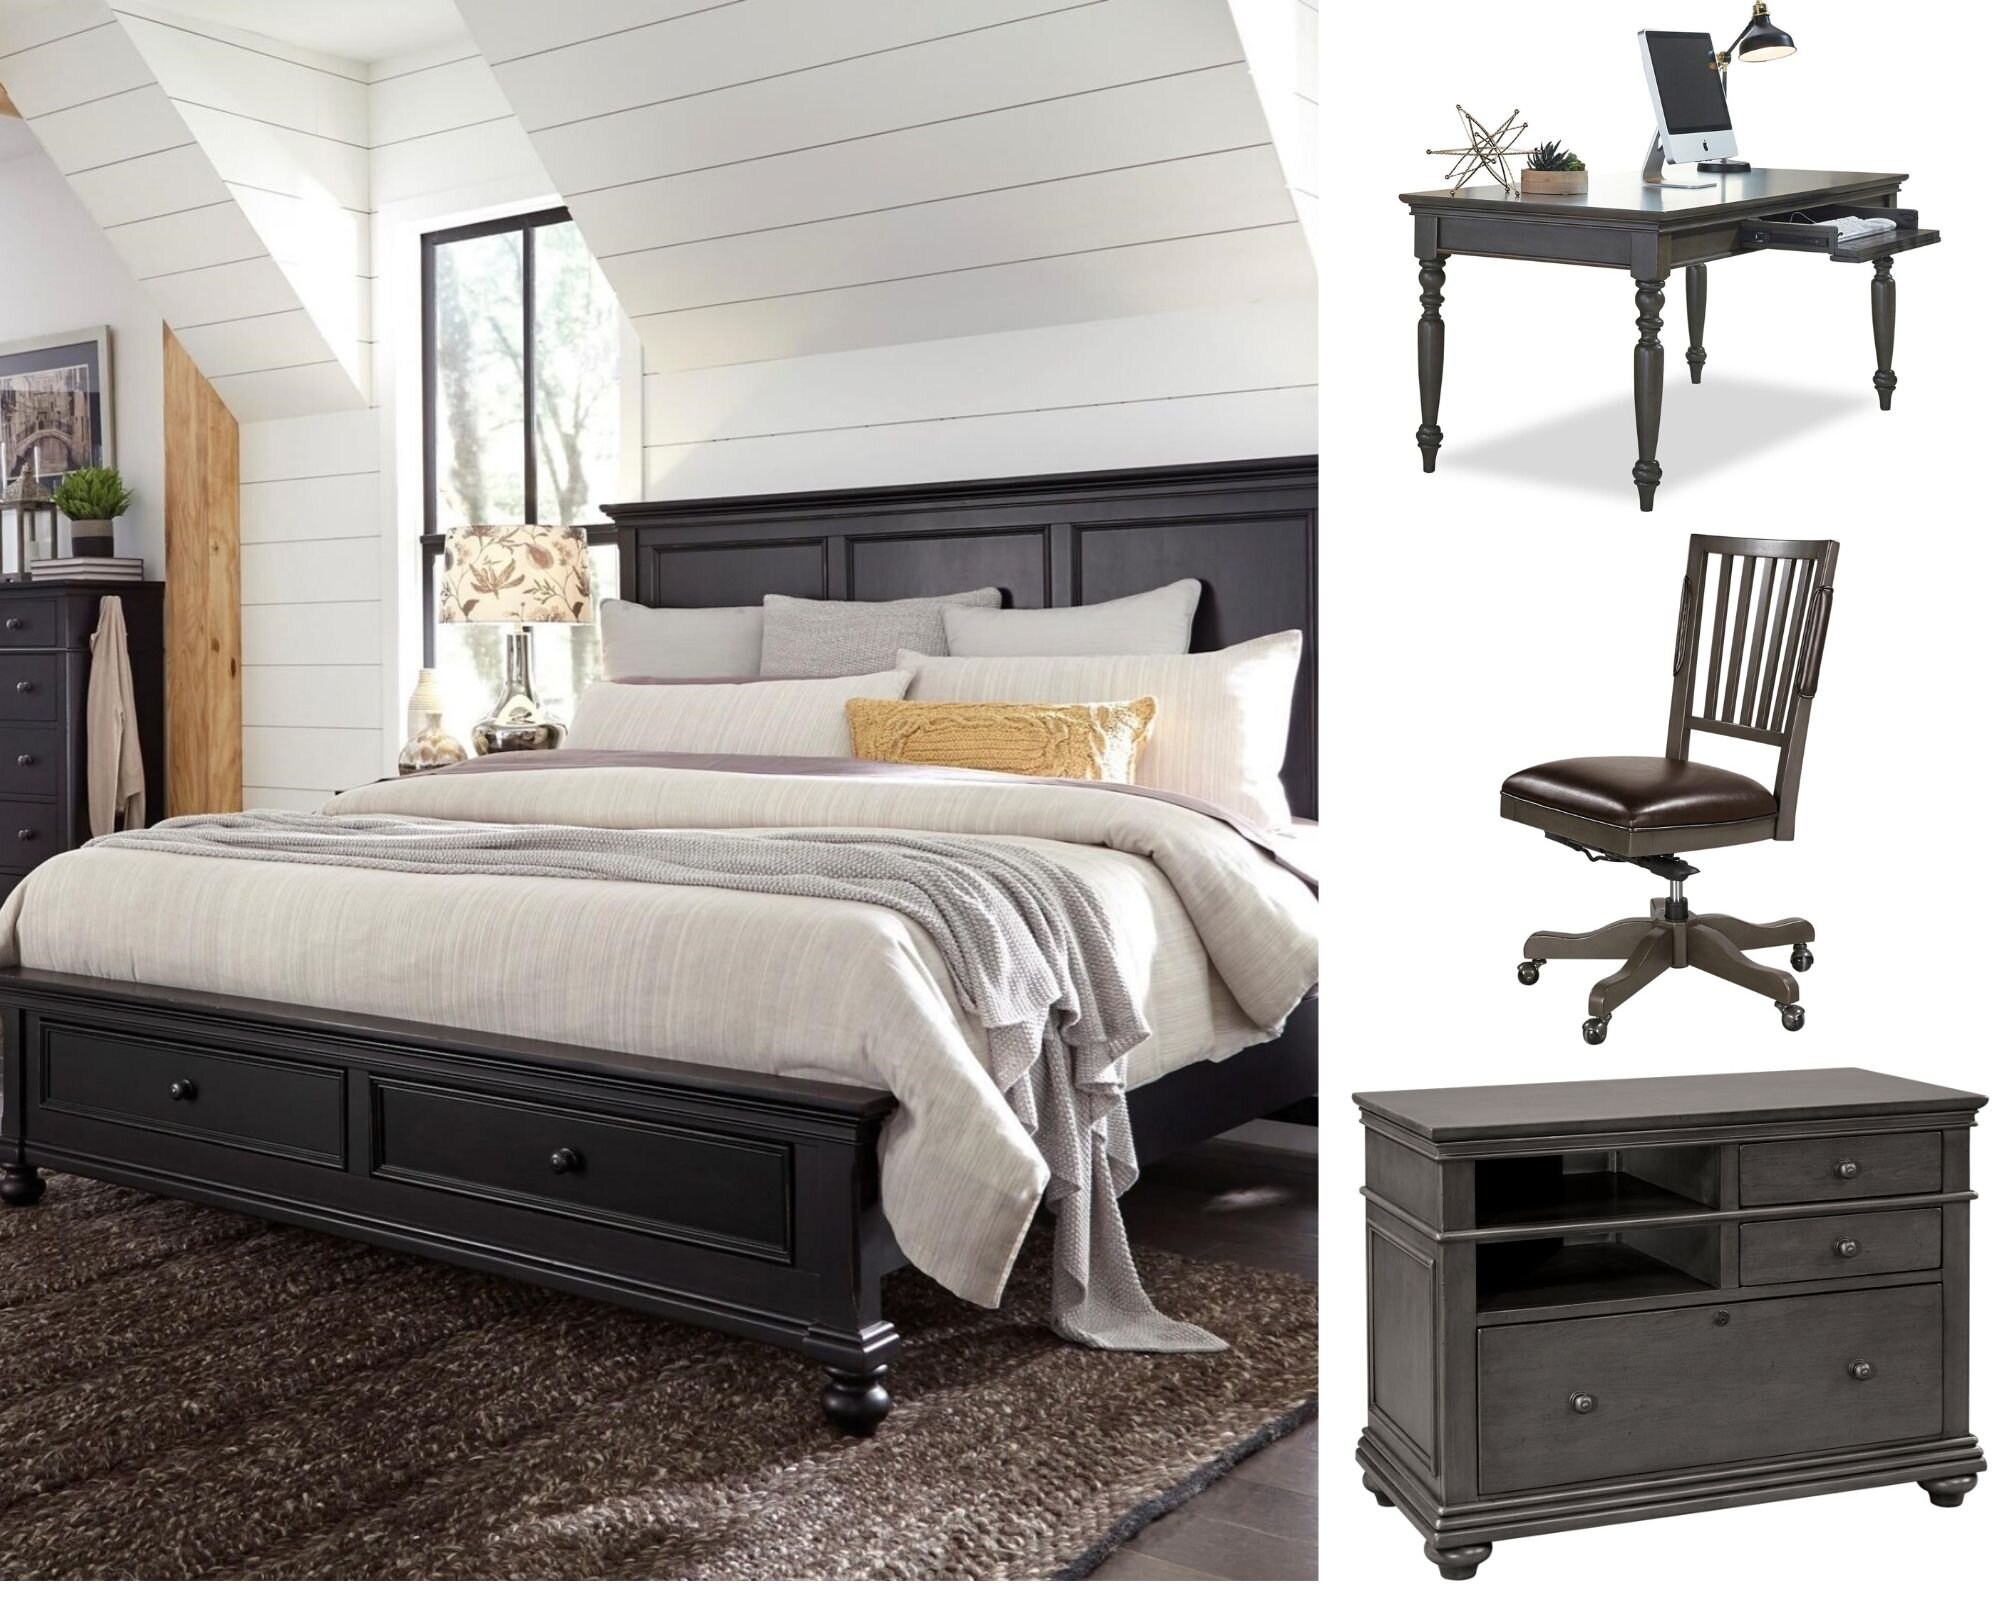 Guest Bedroom Office Combo Ideas — Belfort Buzz Furniture and Design Tips